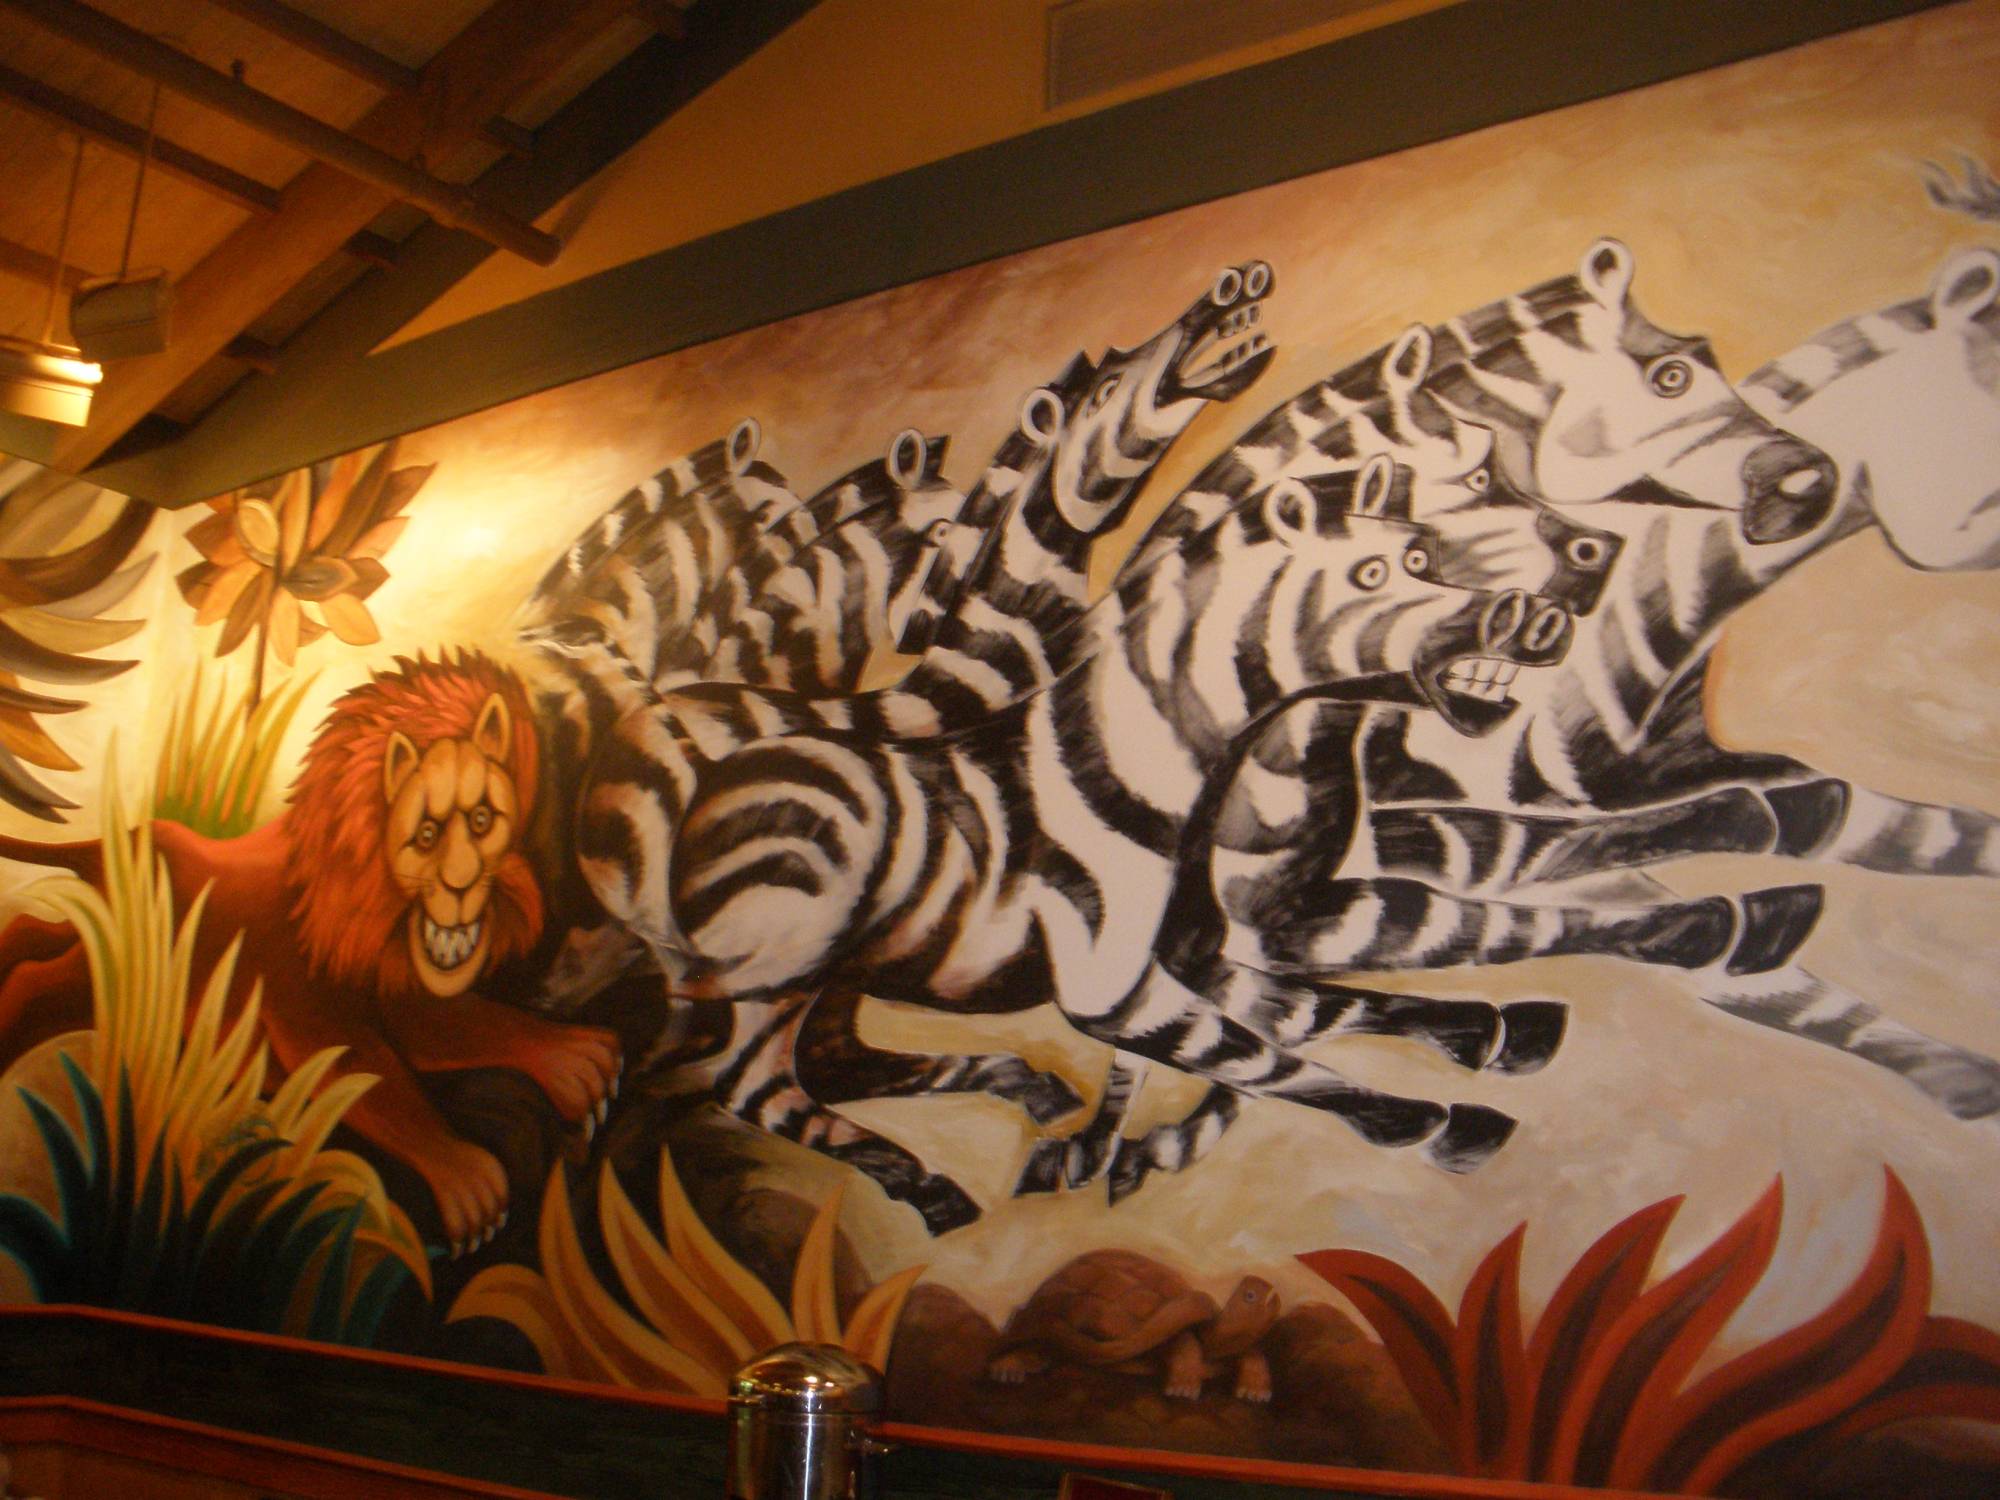 Wall mural at Pizzafari